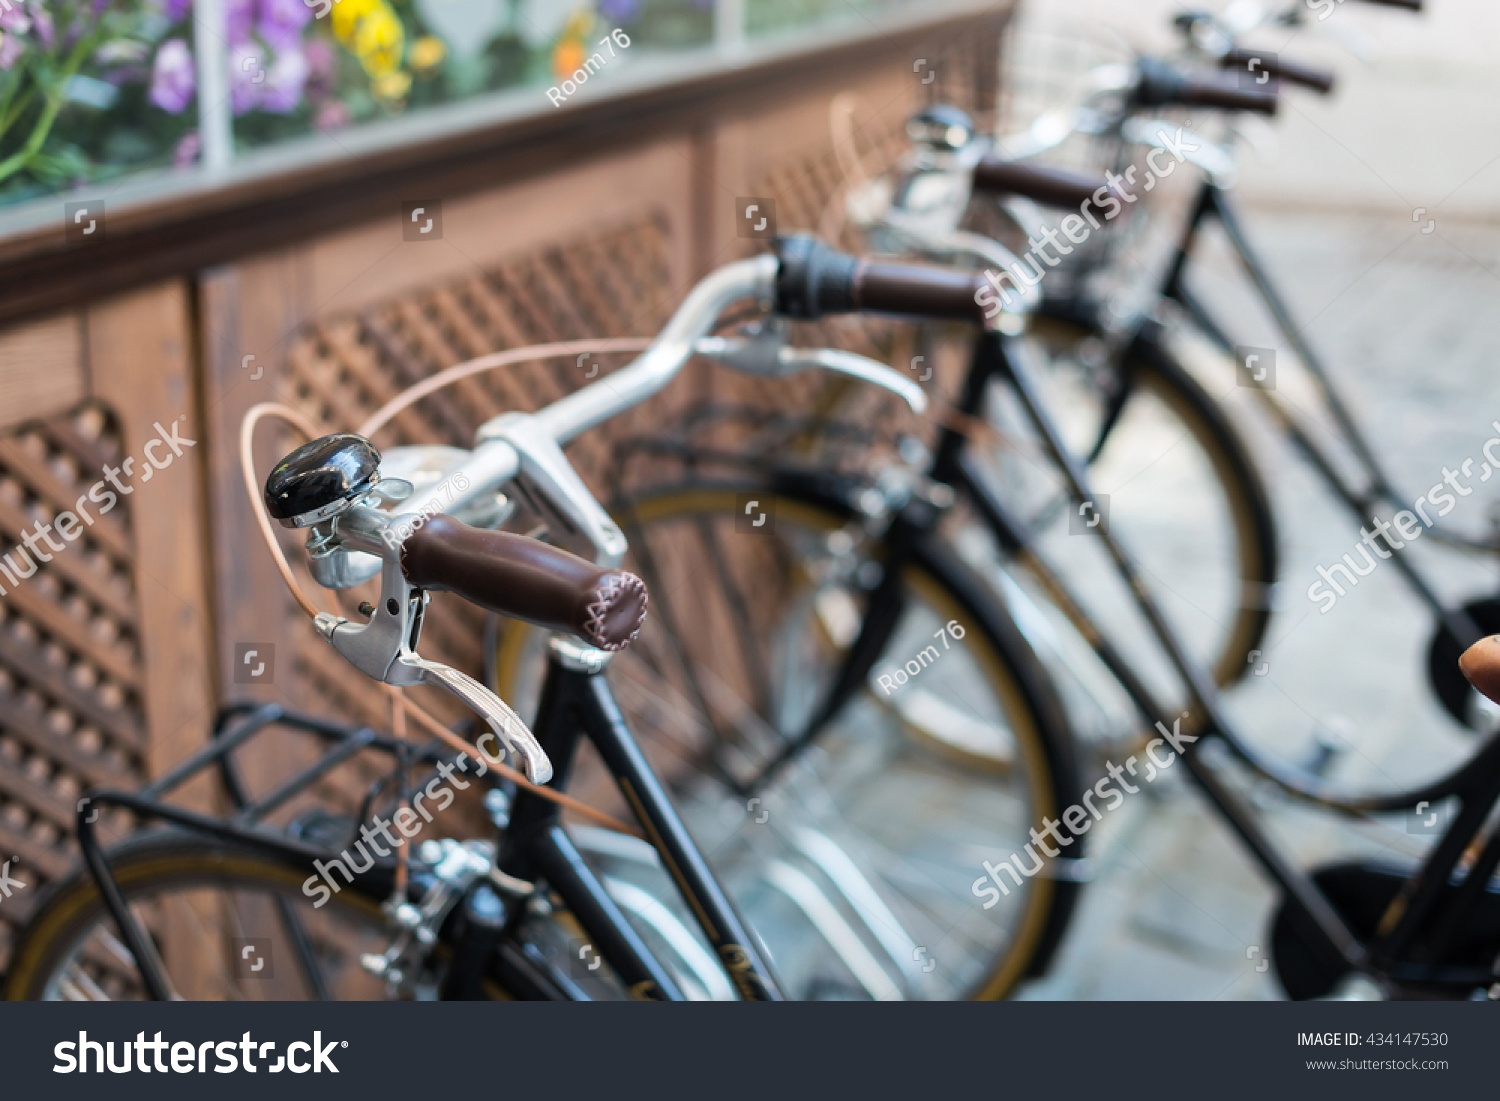 vintage bike stand